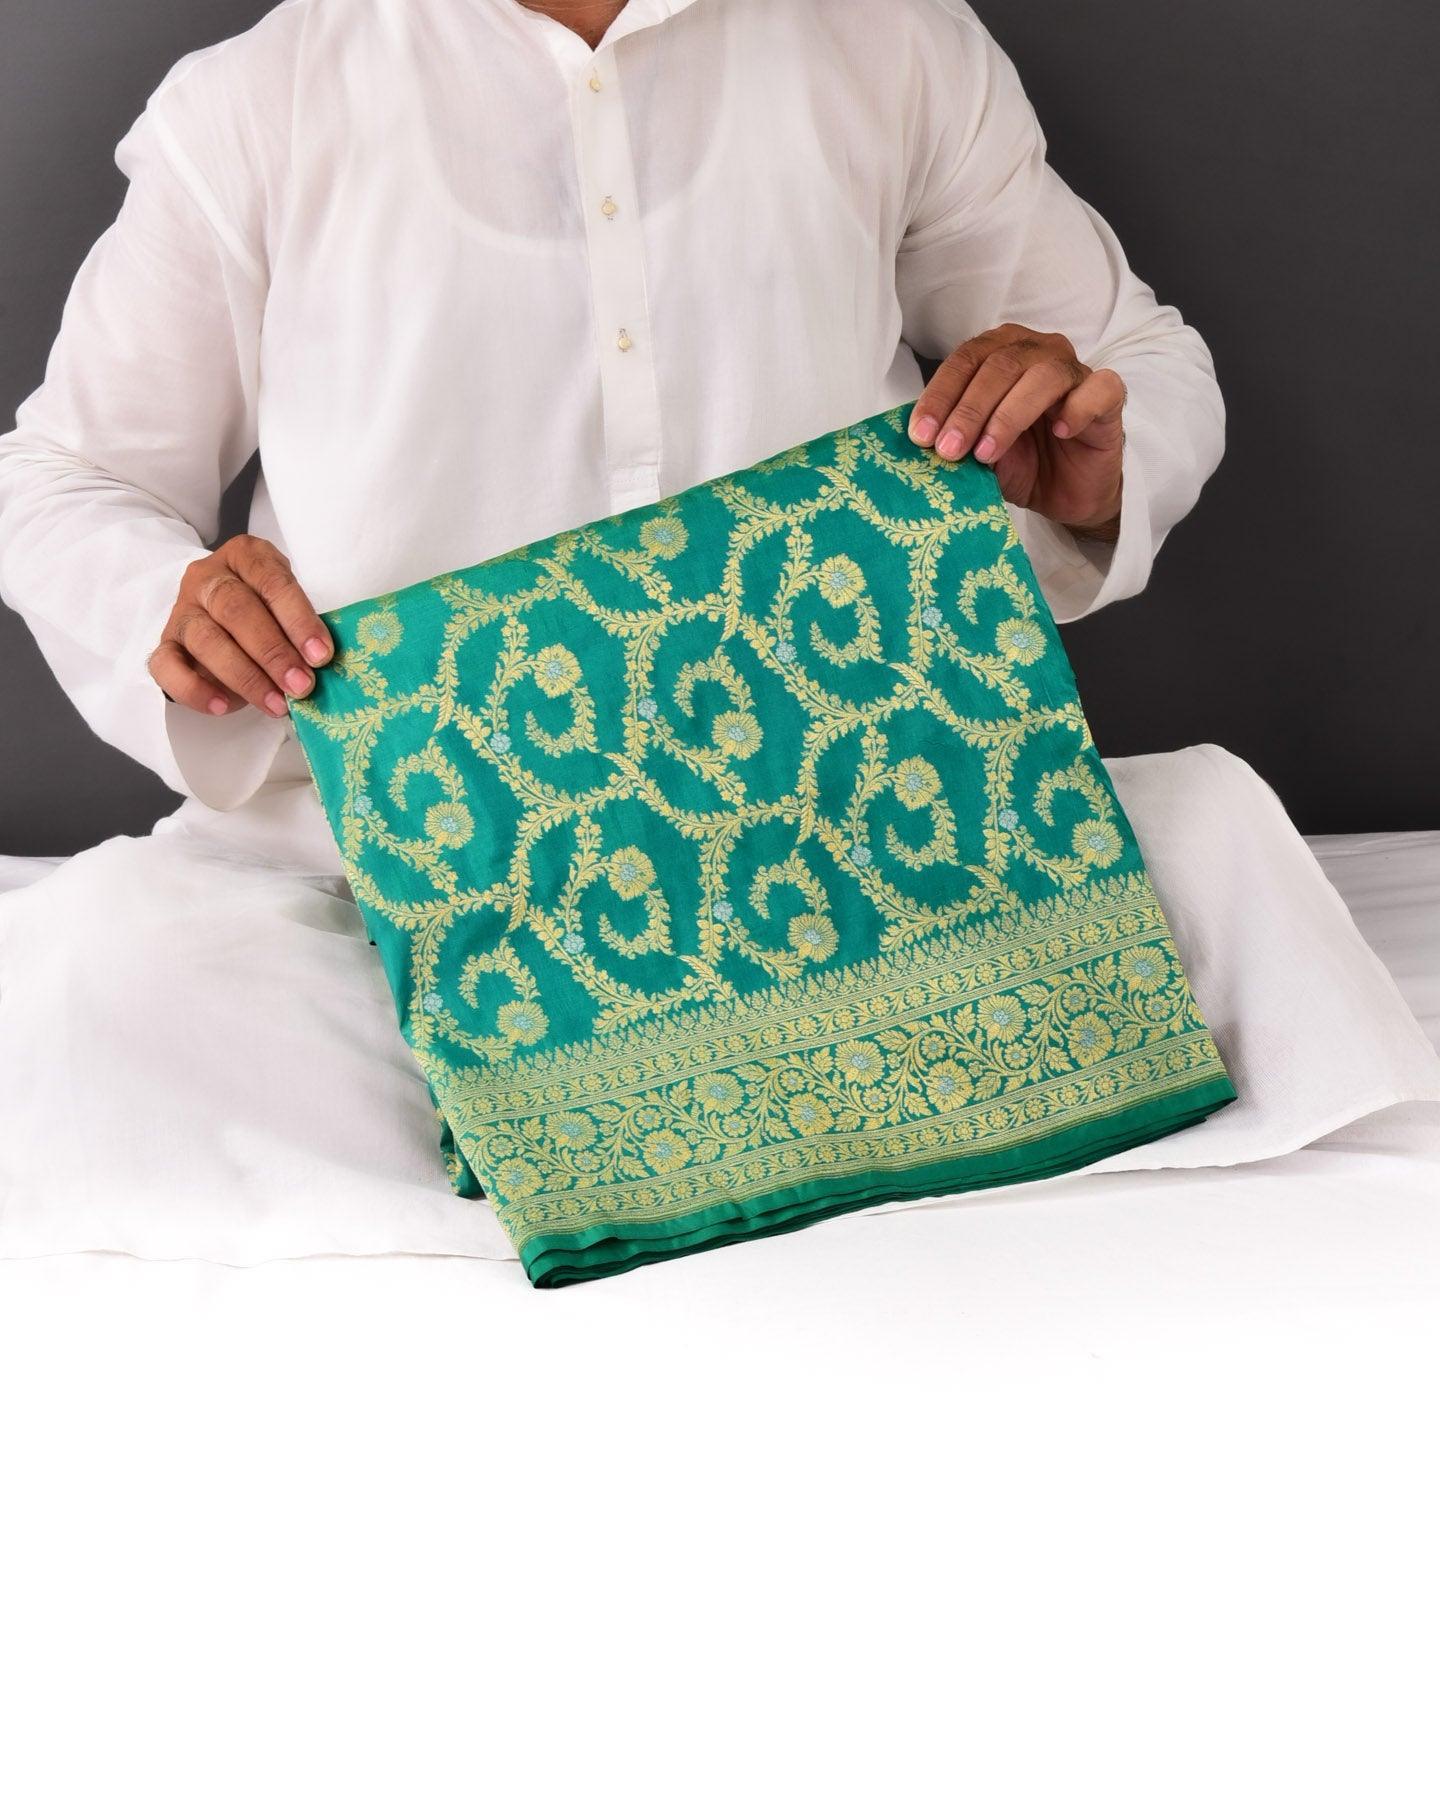 Green Banarasi Sona Rupa Jaal Cutwork Brocade Handwoven Katan Silk Saree - By HolyWeaves, Benares